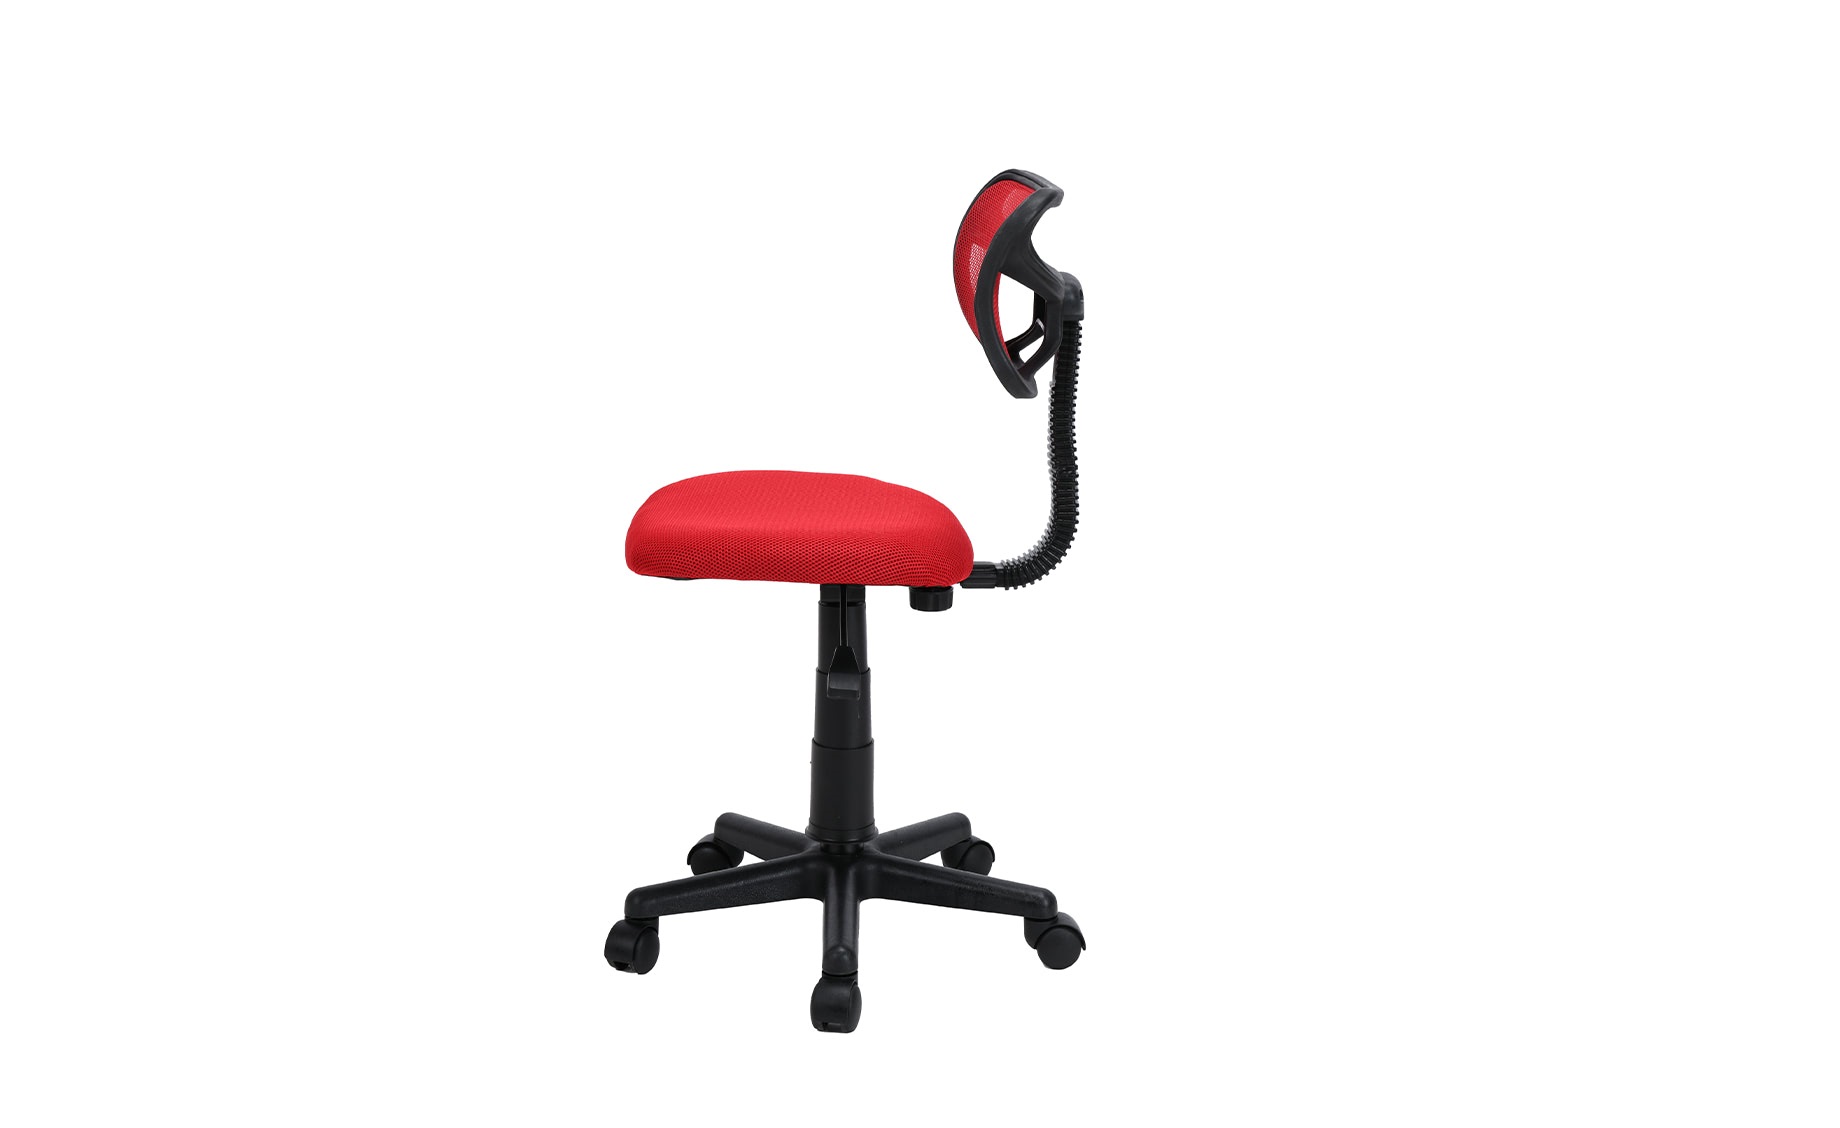 Lumi uredska stolica 46x60x84cm crvena